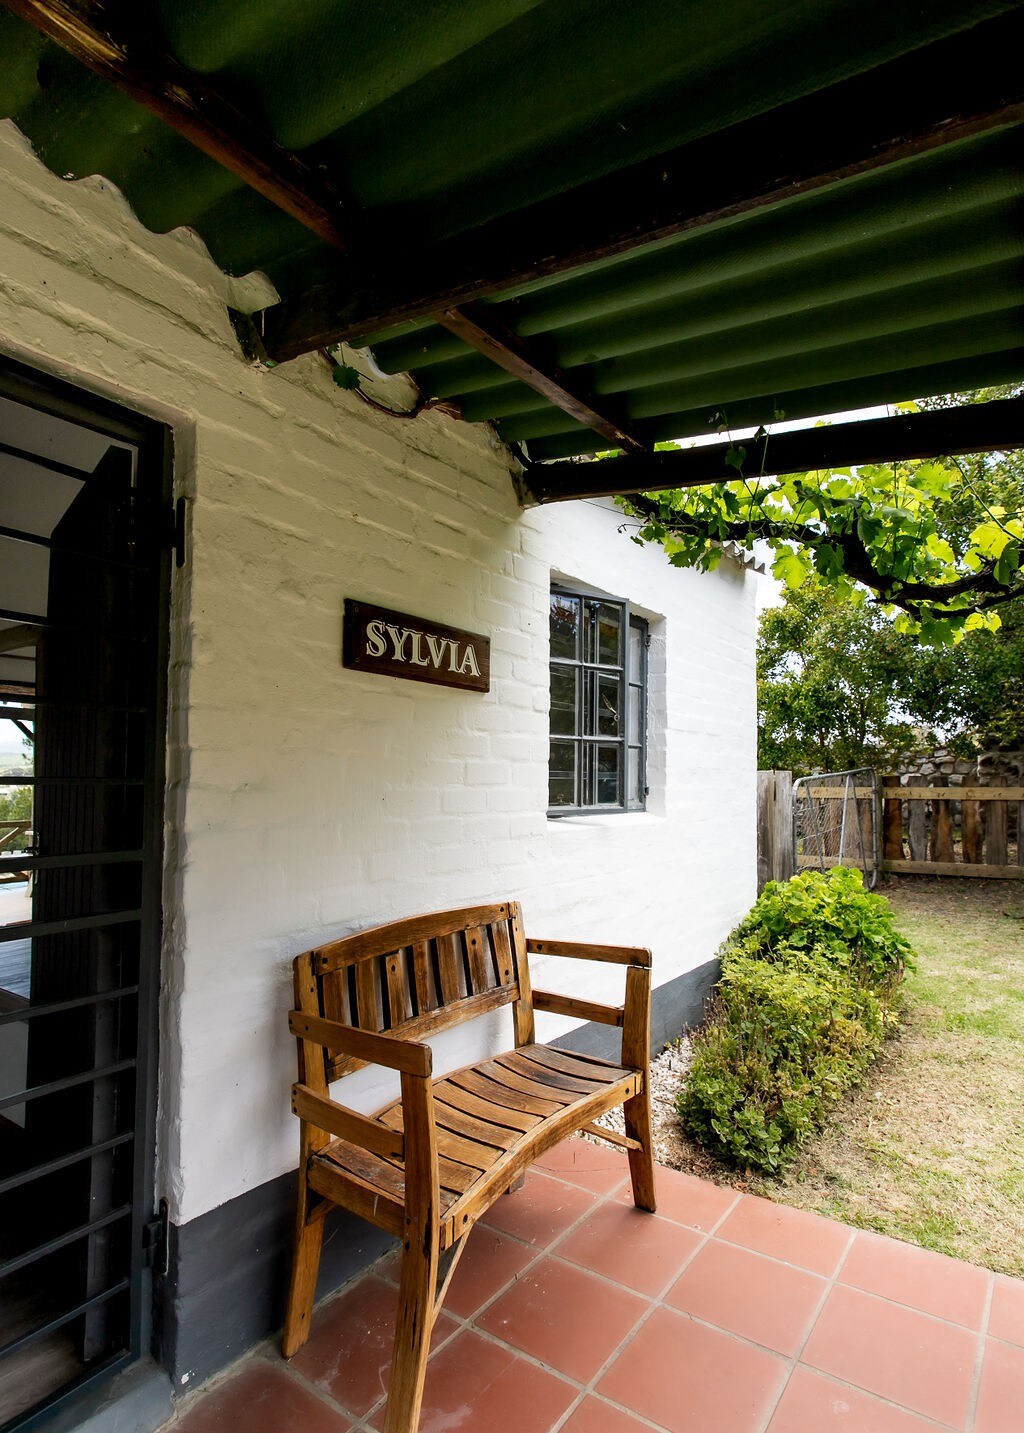 Sylvia farm cottage on award winning wine farm